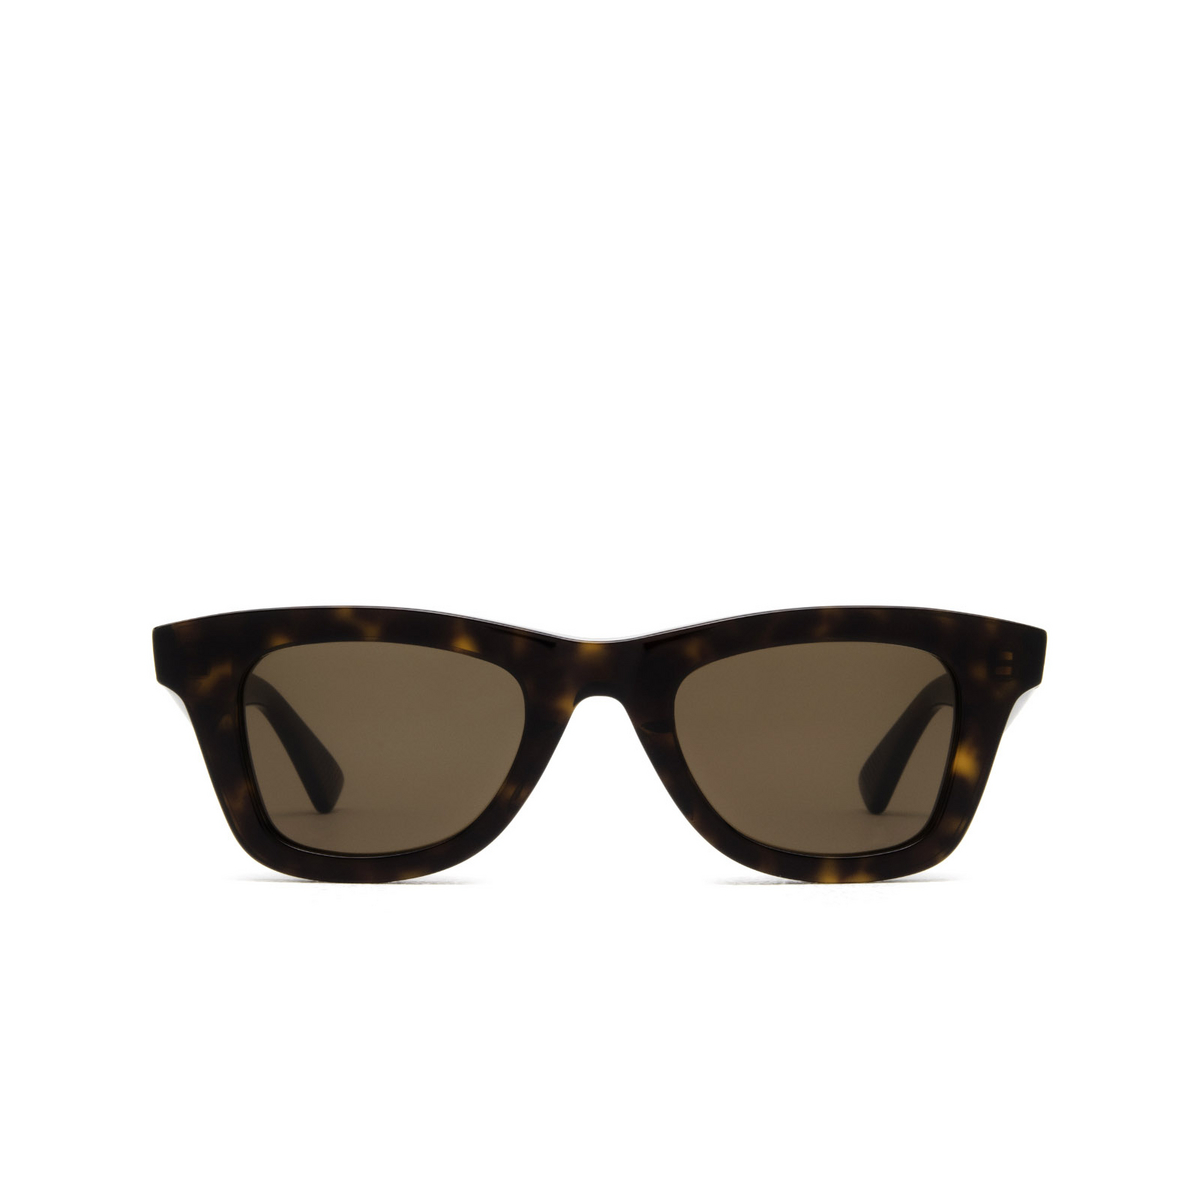 Bottega Veneta® Square Sunglasses: BV1147S color Havana 002 - front view.